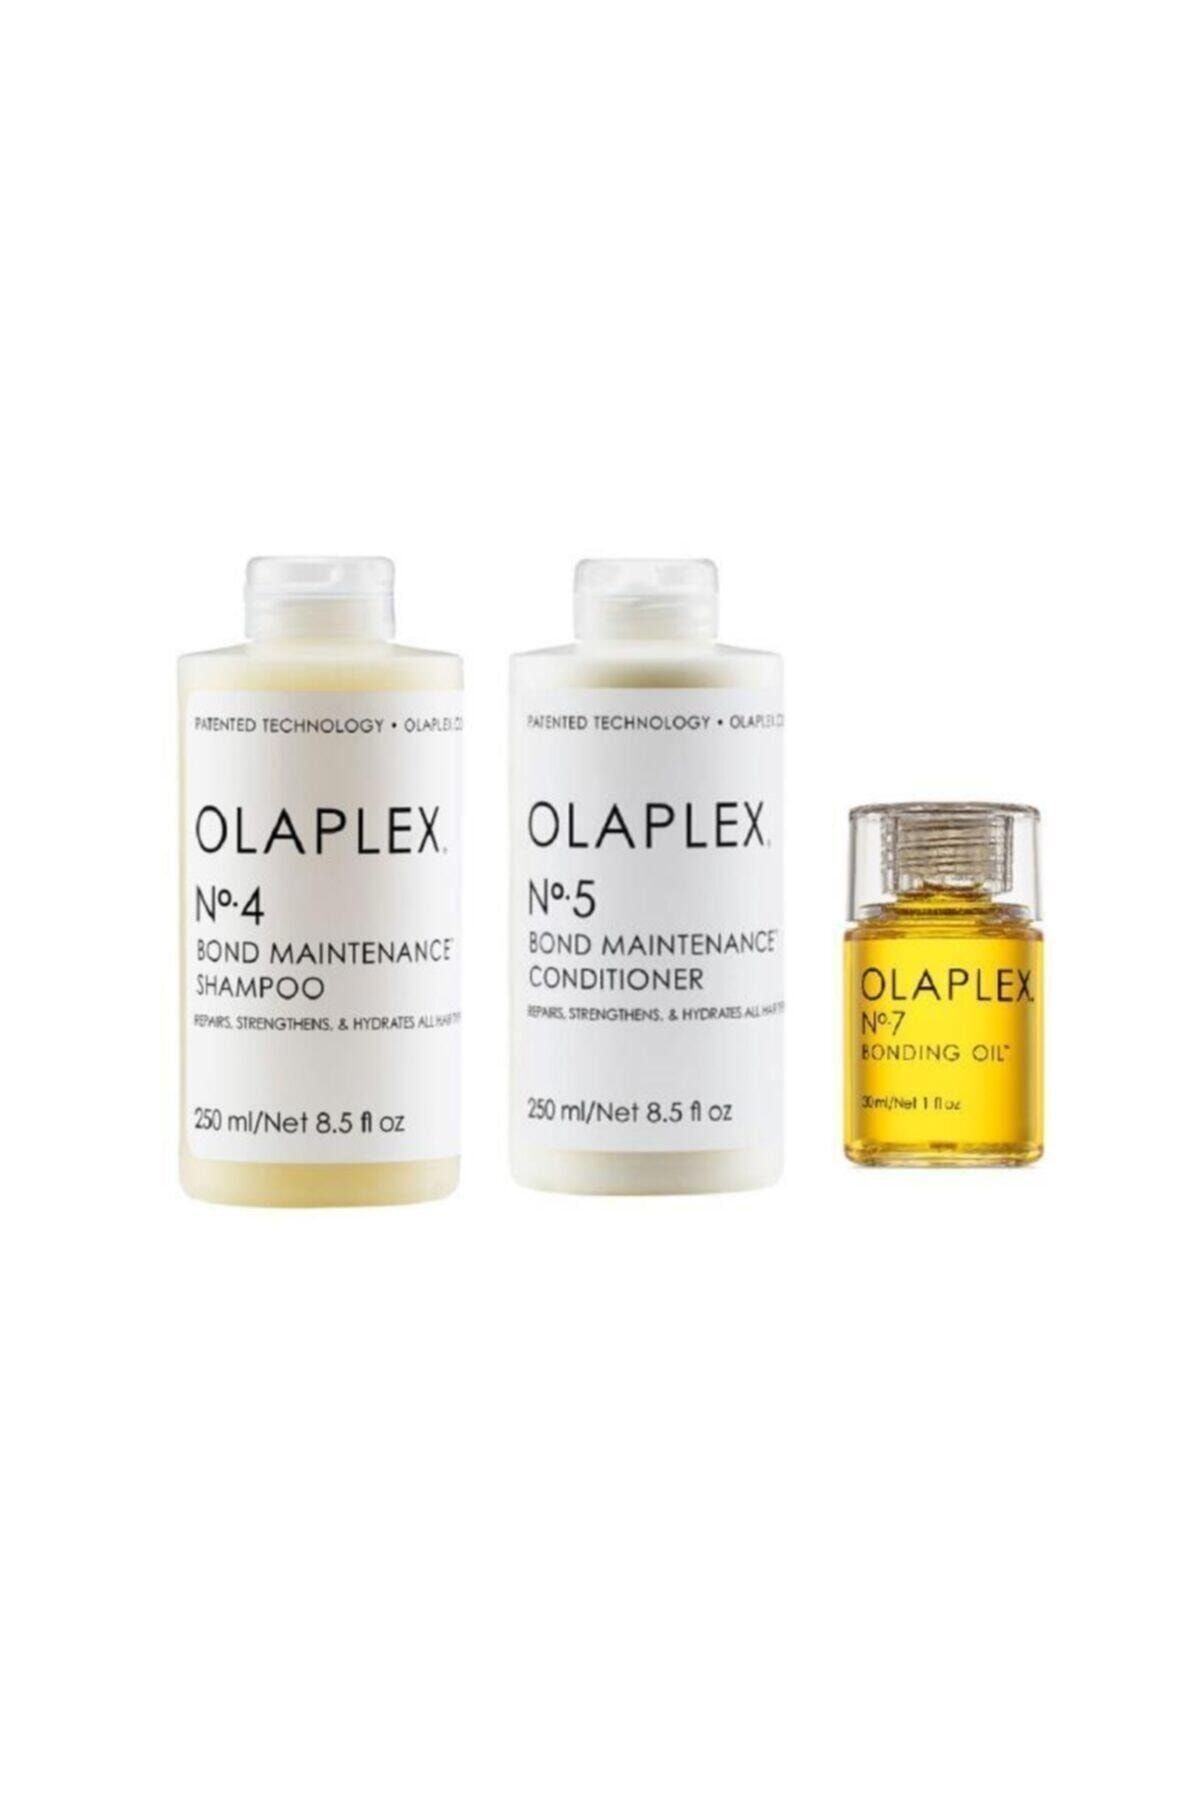 Olaplex مجموعه مراقبت از مو شماره ۴ ۲۵۰ میلی لیتر + کرم مراقبت شماره ۵ ۲۵۰ میلی لیتر + روغن مراقبت شماره ۷ ۳۰ میلی لیتر